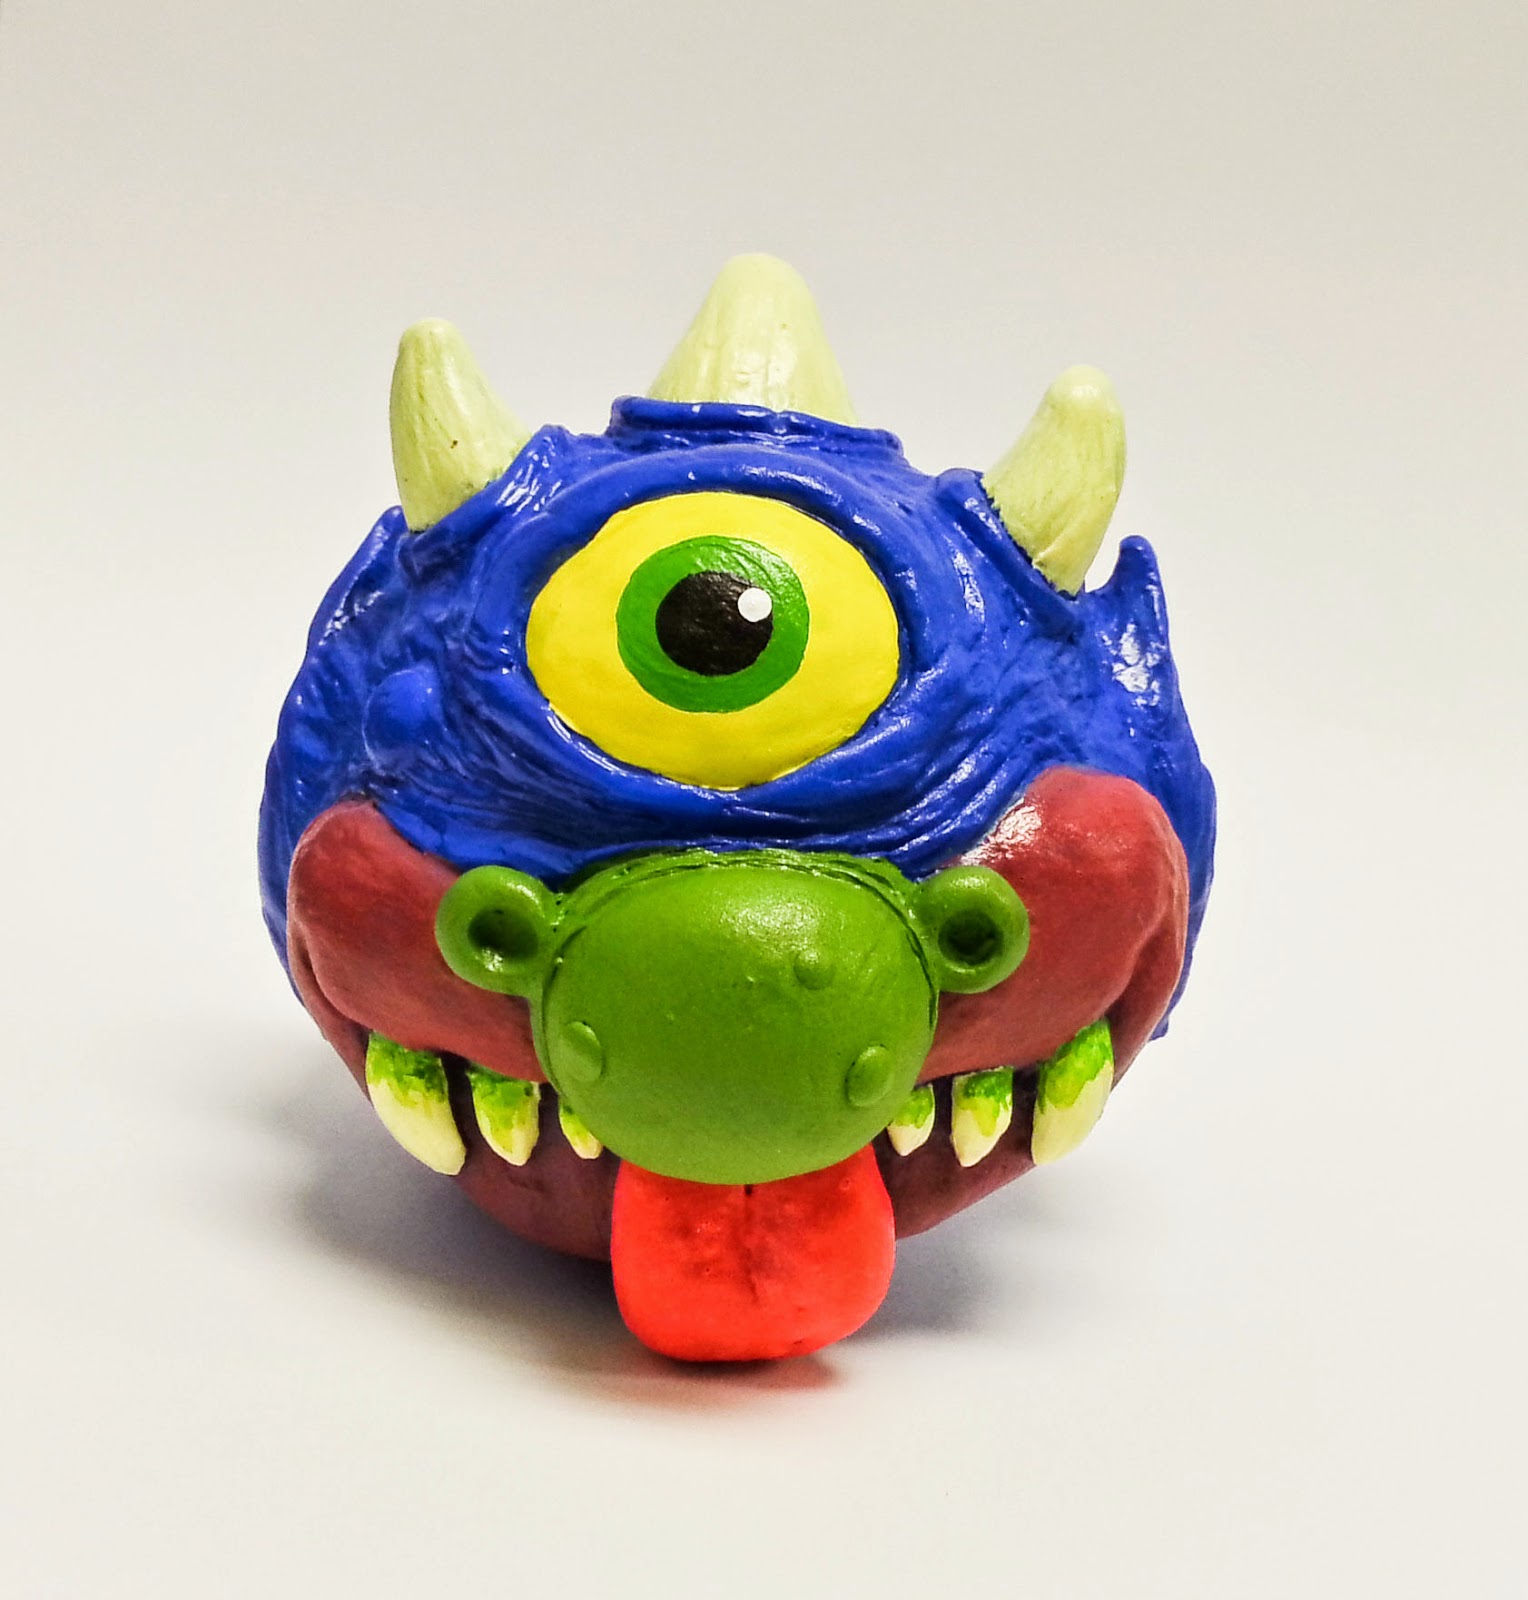 Madballs x My Pet Monster “My Pet Madball” Resin Figure by Motorbot